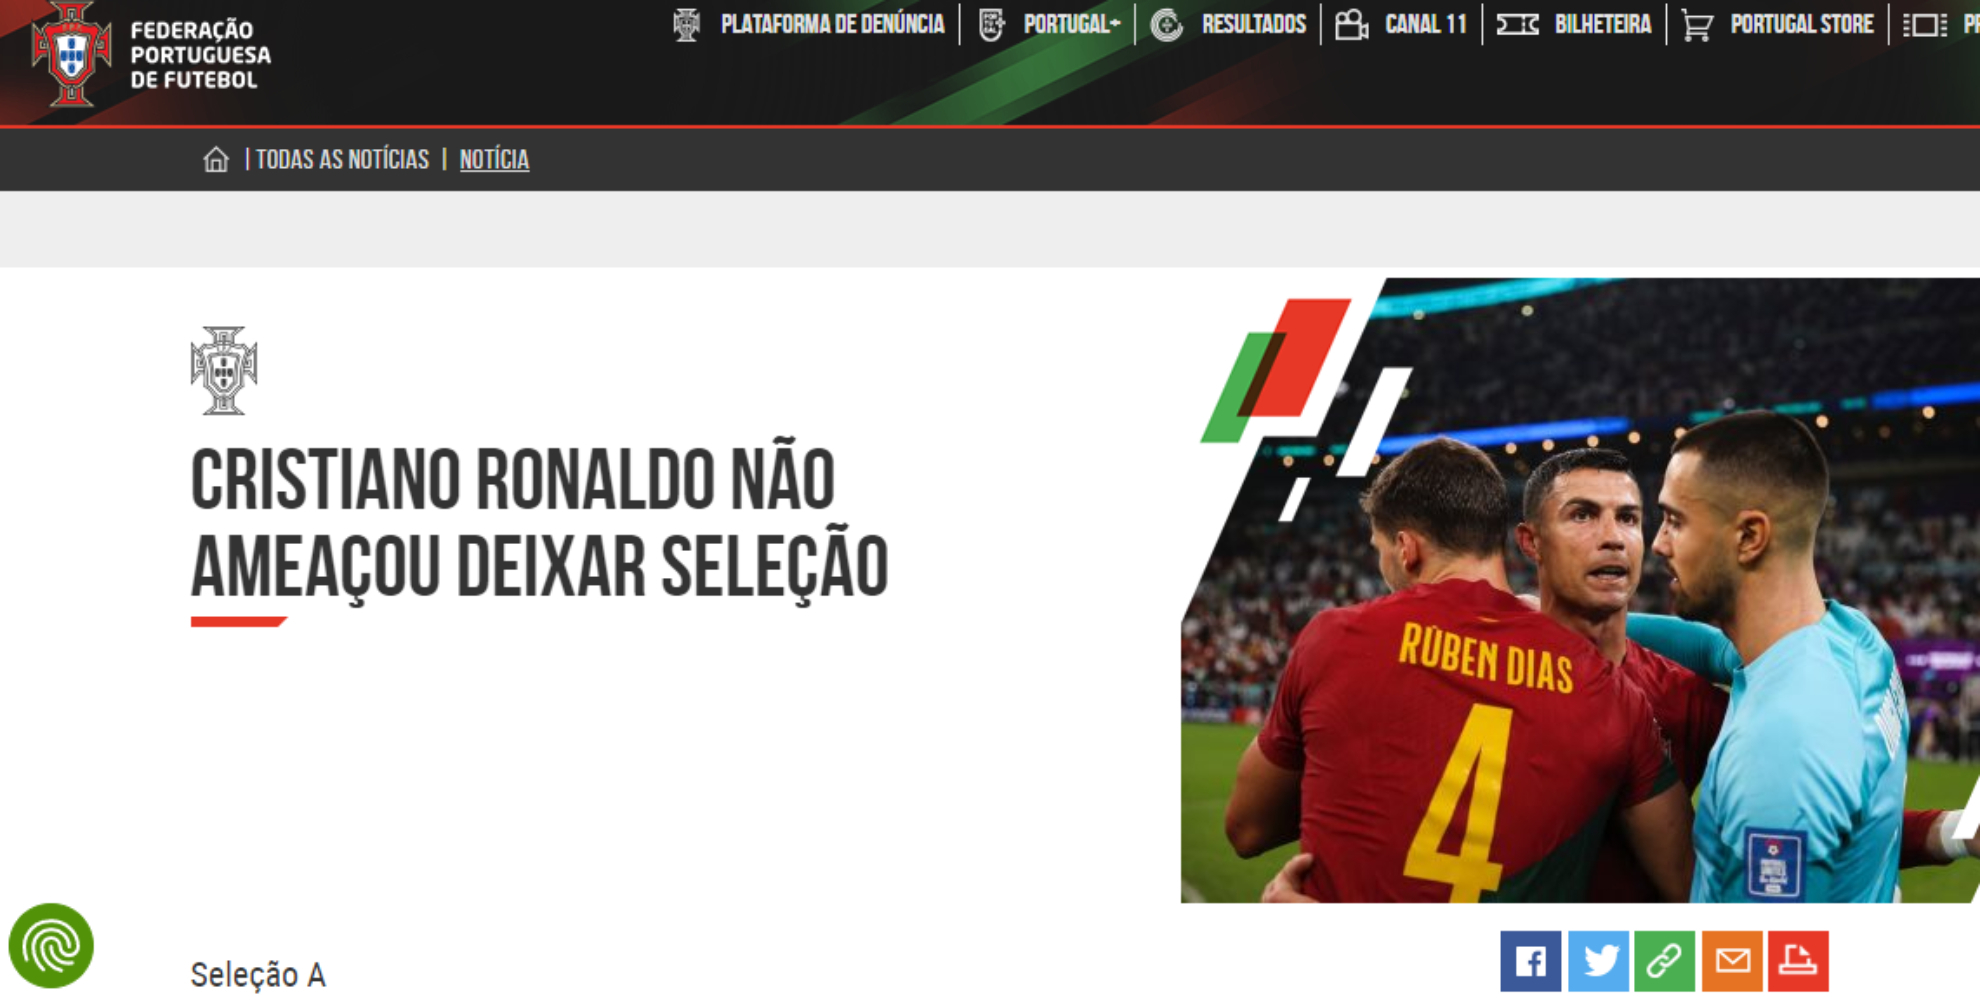 Lo con Cristiano Ronaldo: sus polmicas condicionan a Portugal